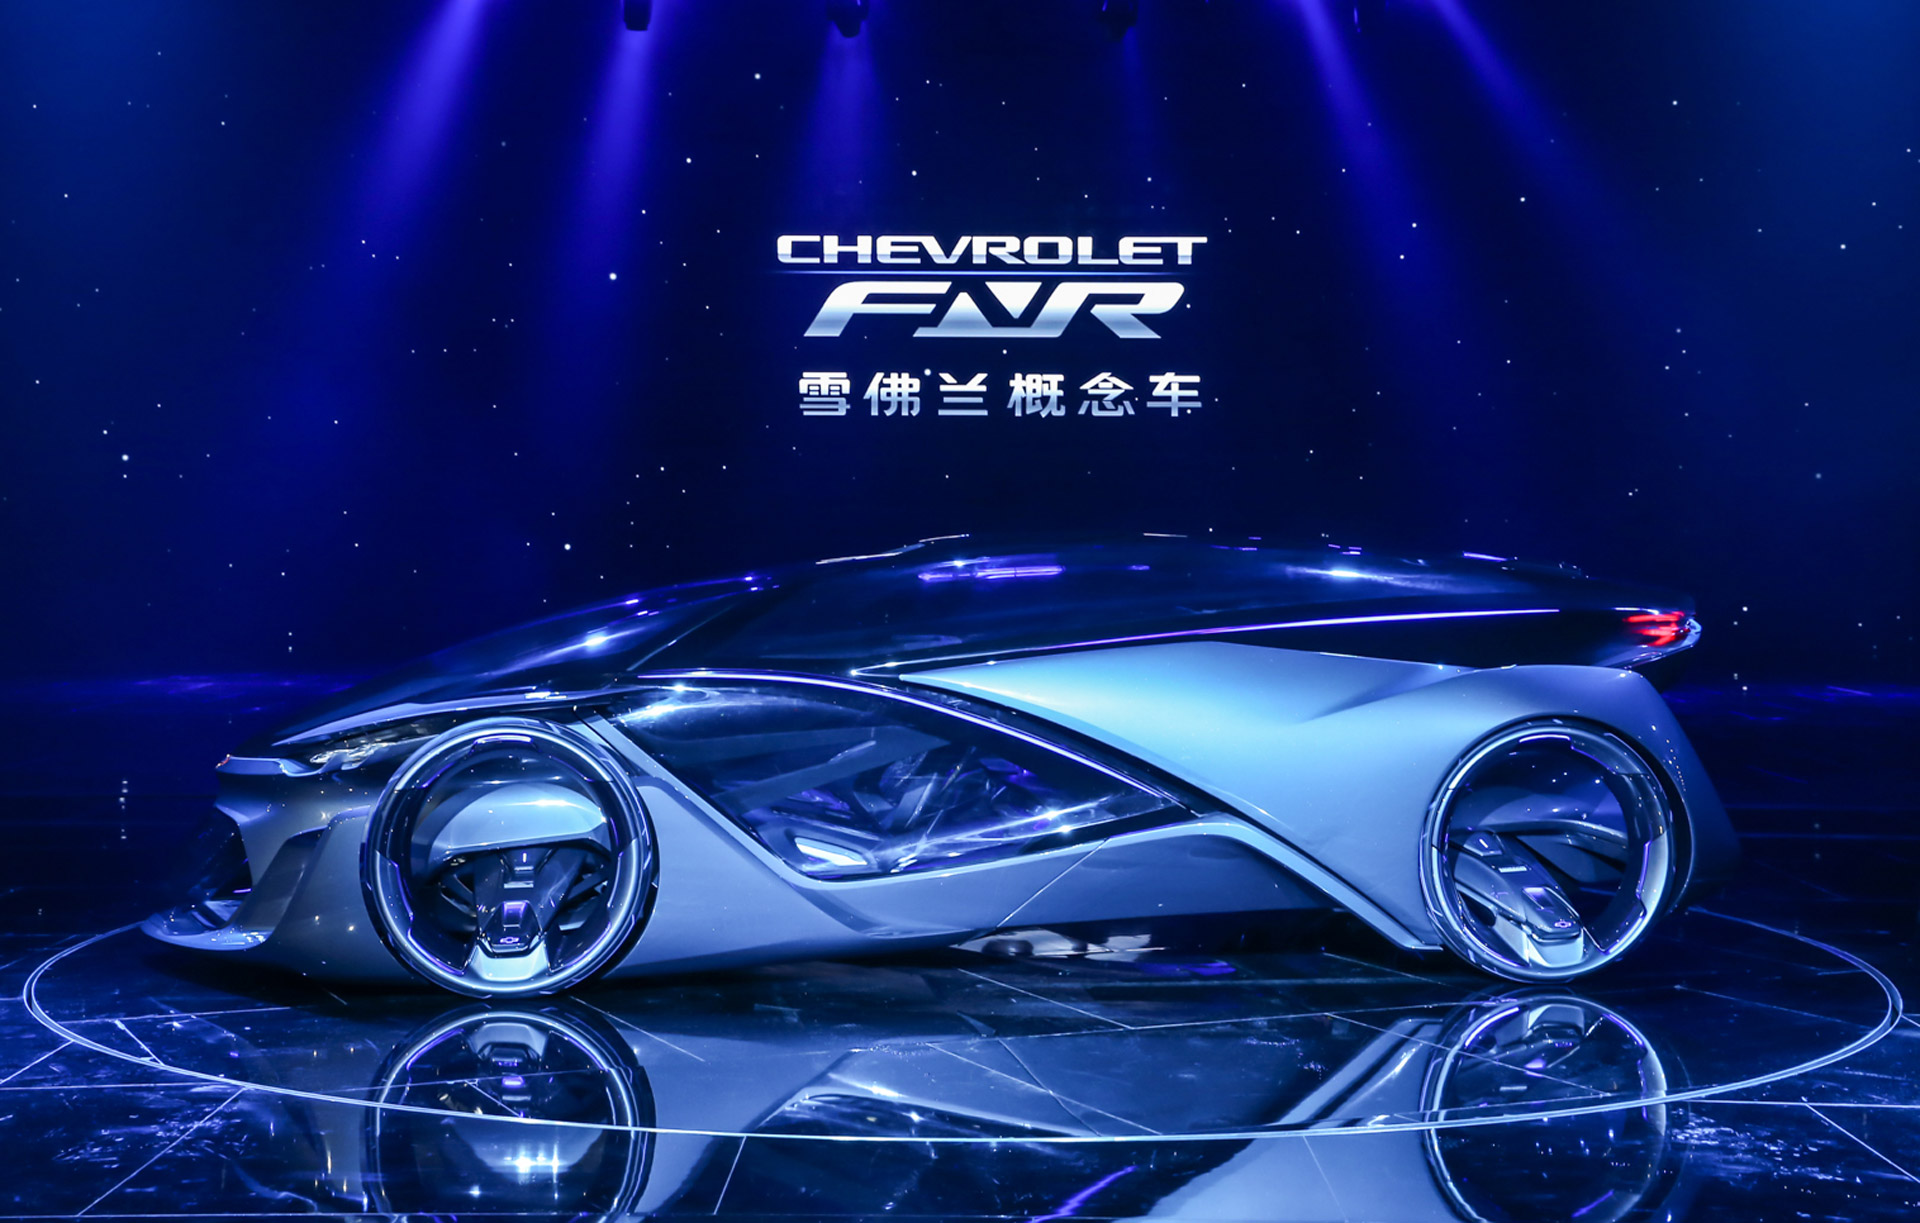 Chevy Fnr Concept Brings Autonomous Drive Electric Power Sci Fi Styling To Shanghai